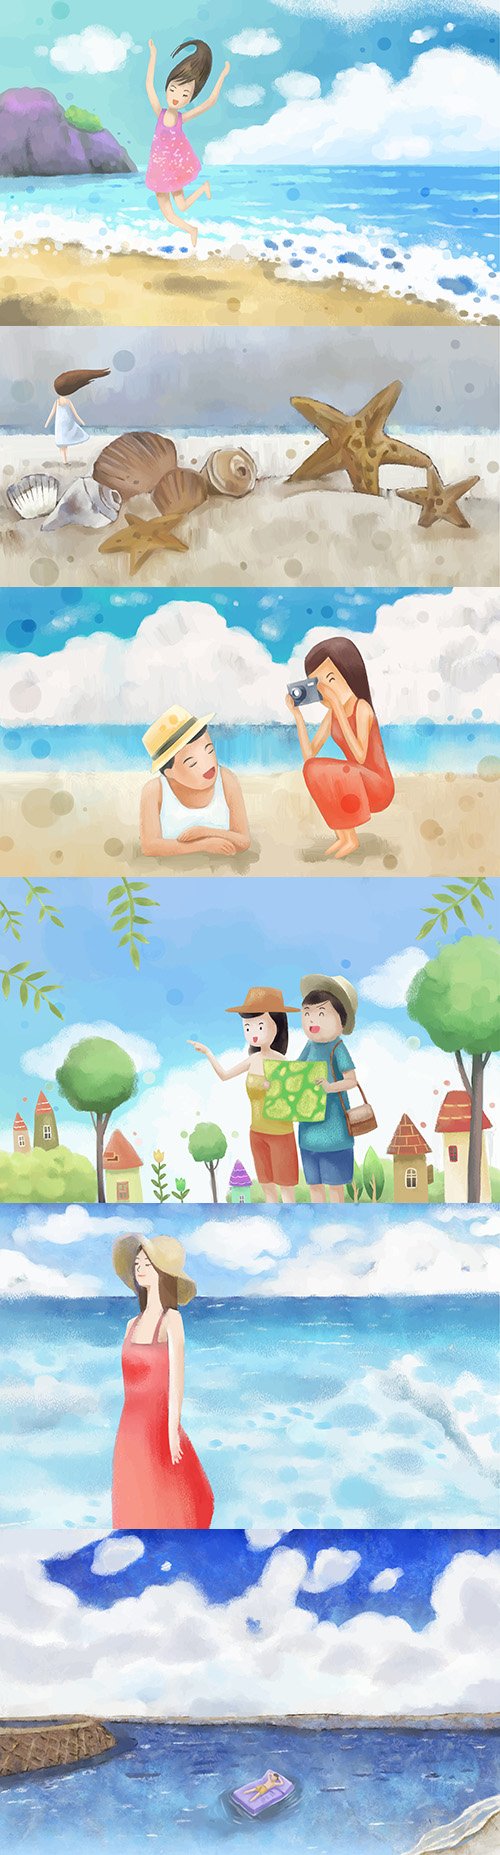 Summer holiday at sea watercolor background